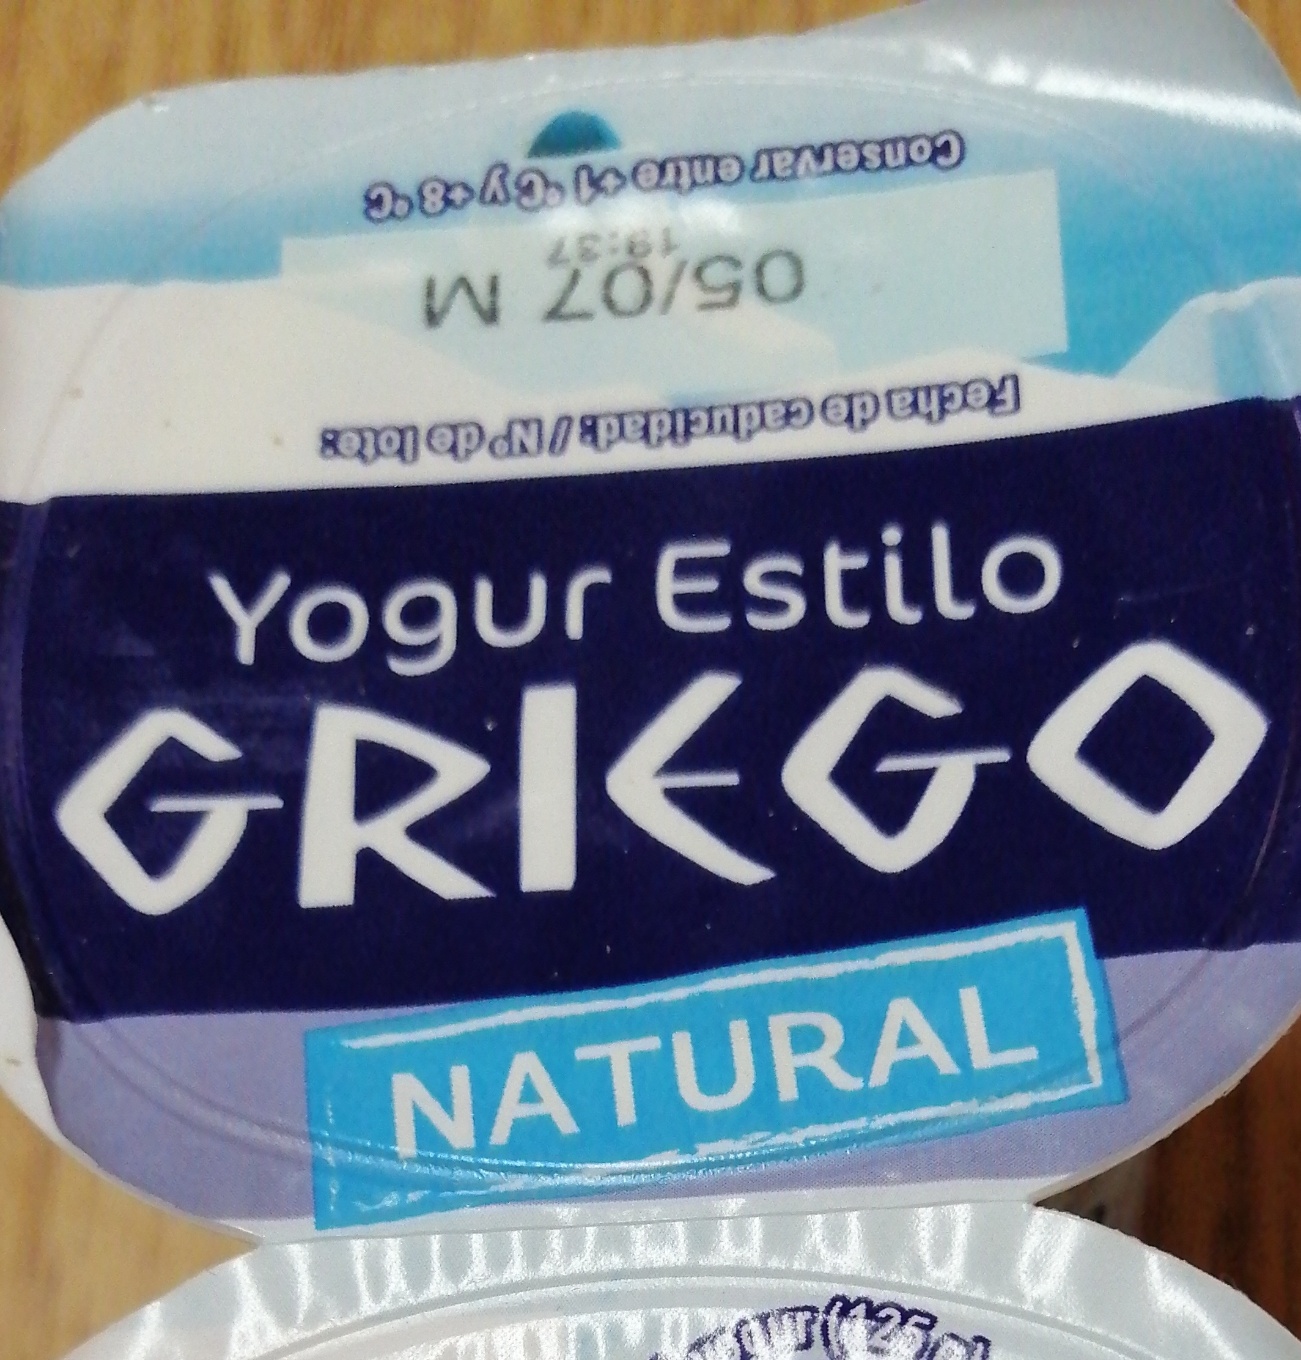 Yogur estilo griego